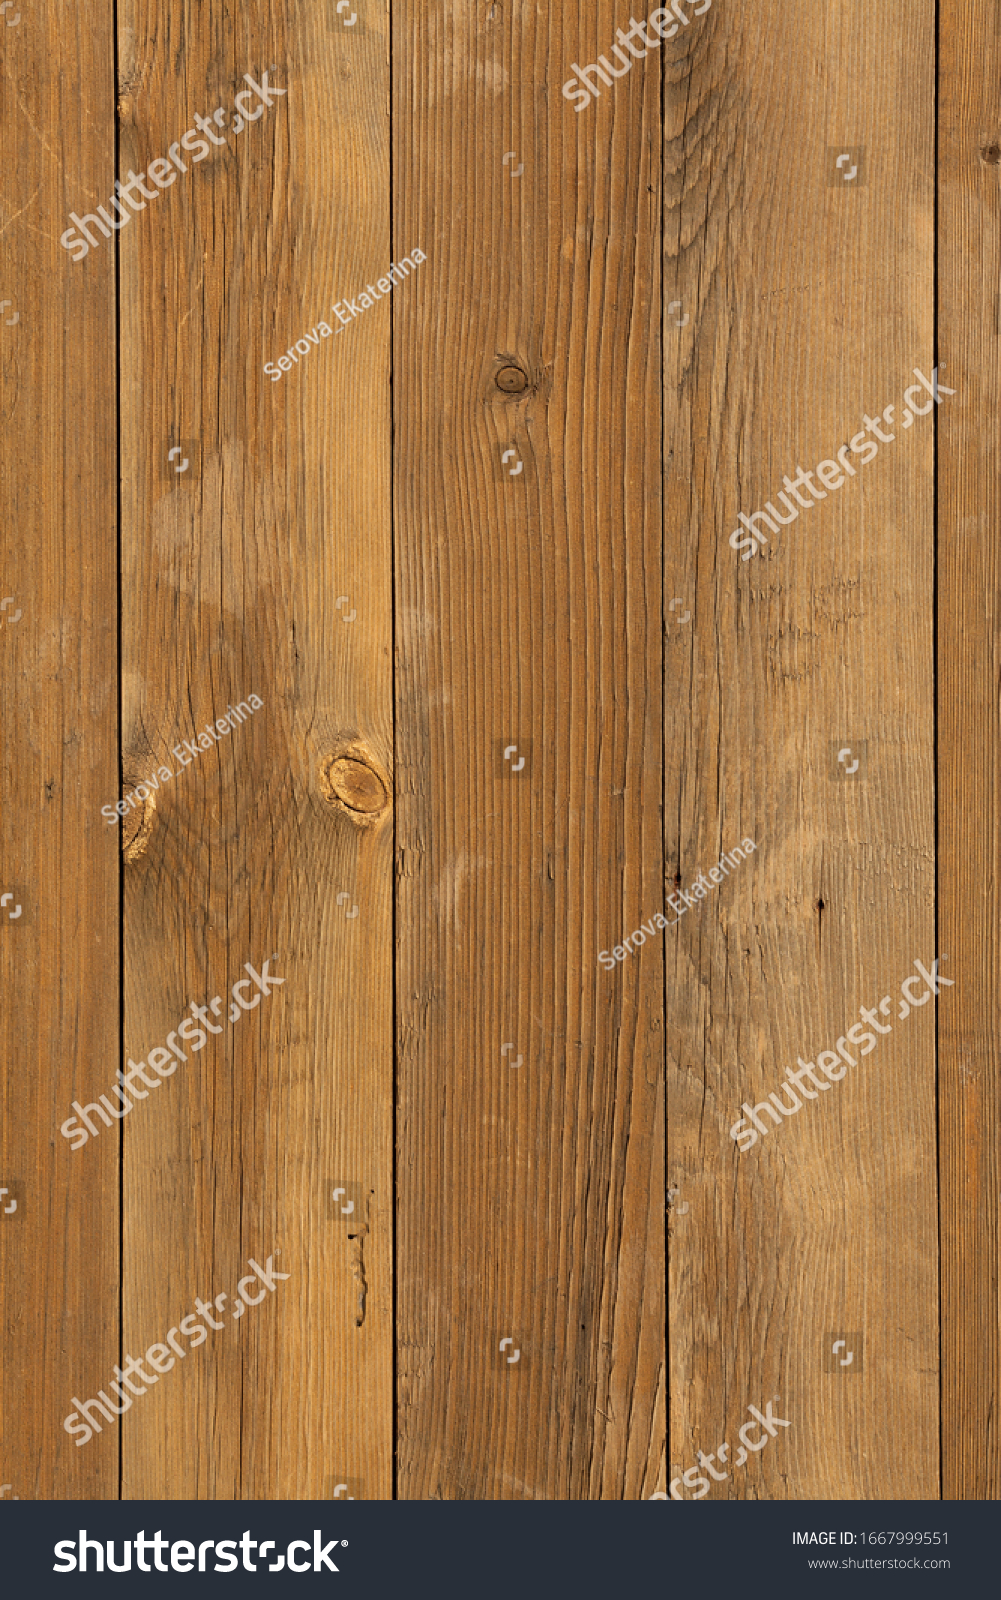 Wooden planks texture vintage. Copy space. #1667999551